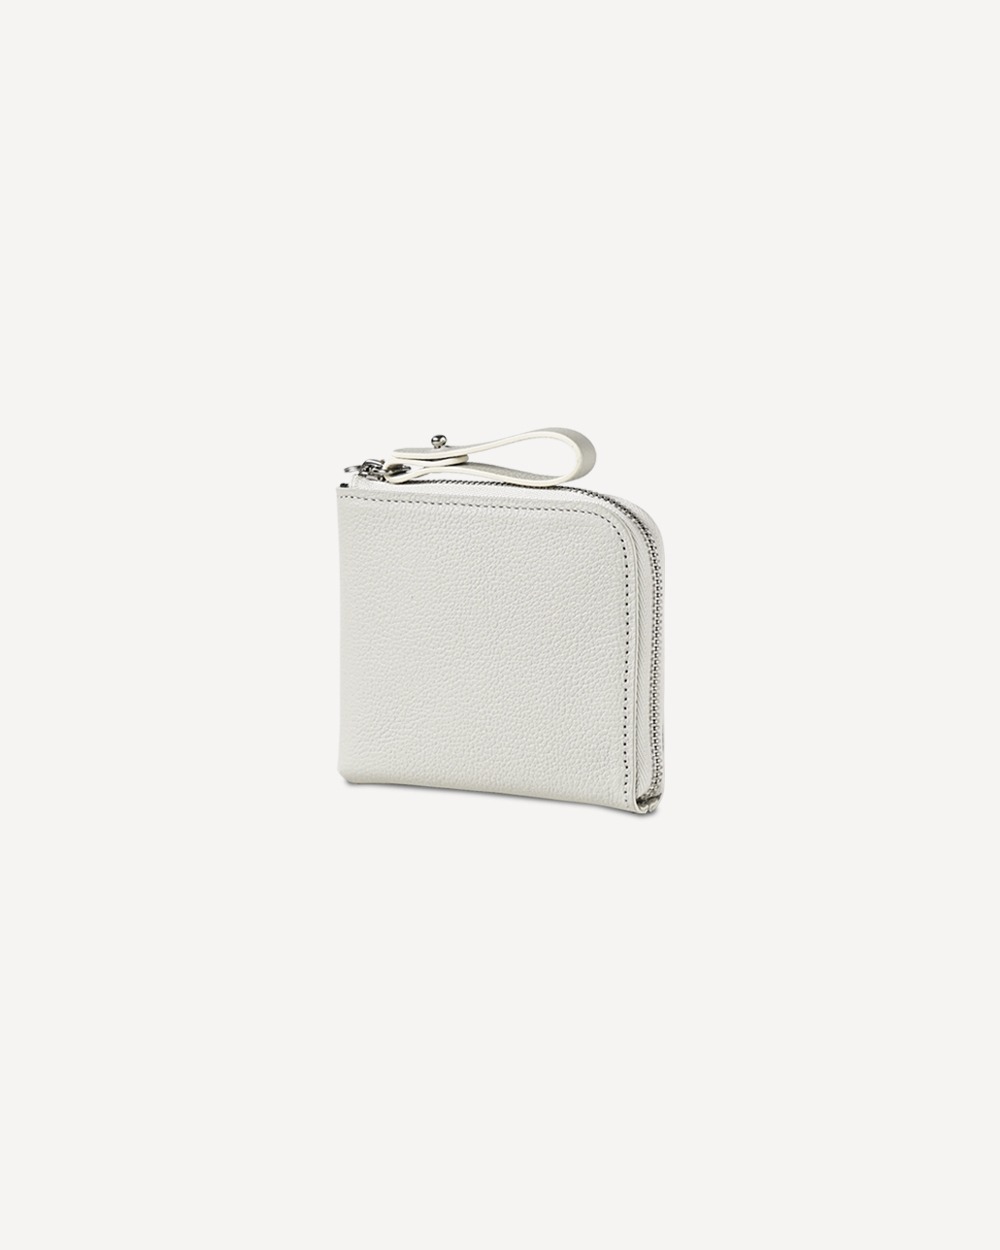 Roomy Zipper Wallet / Light gray